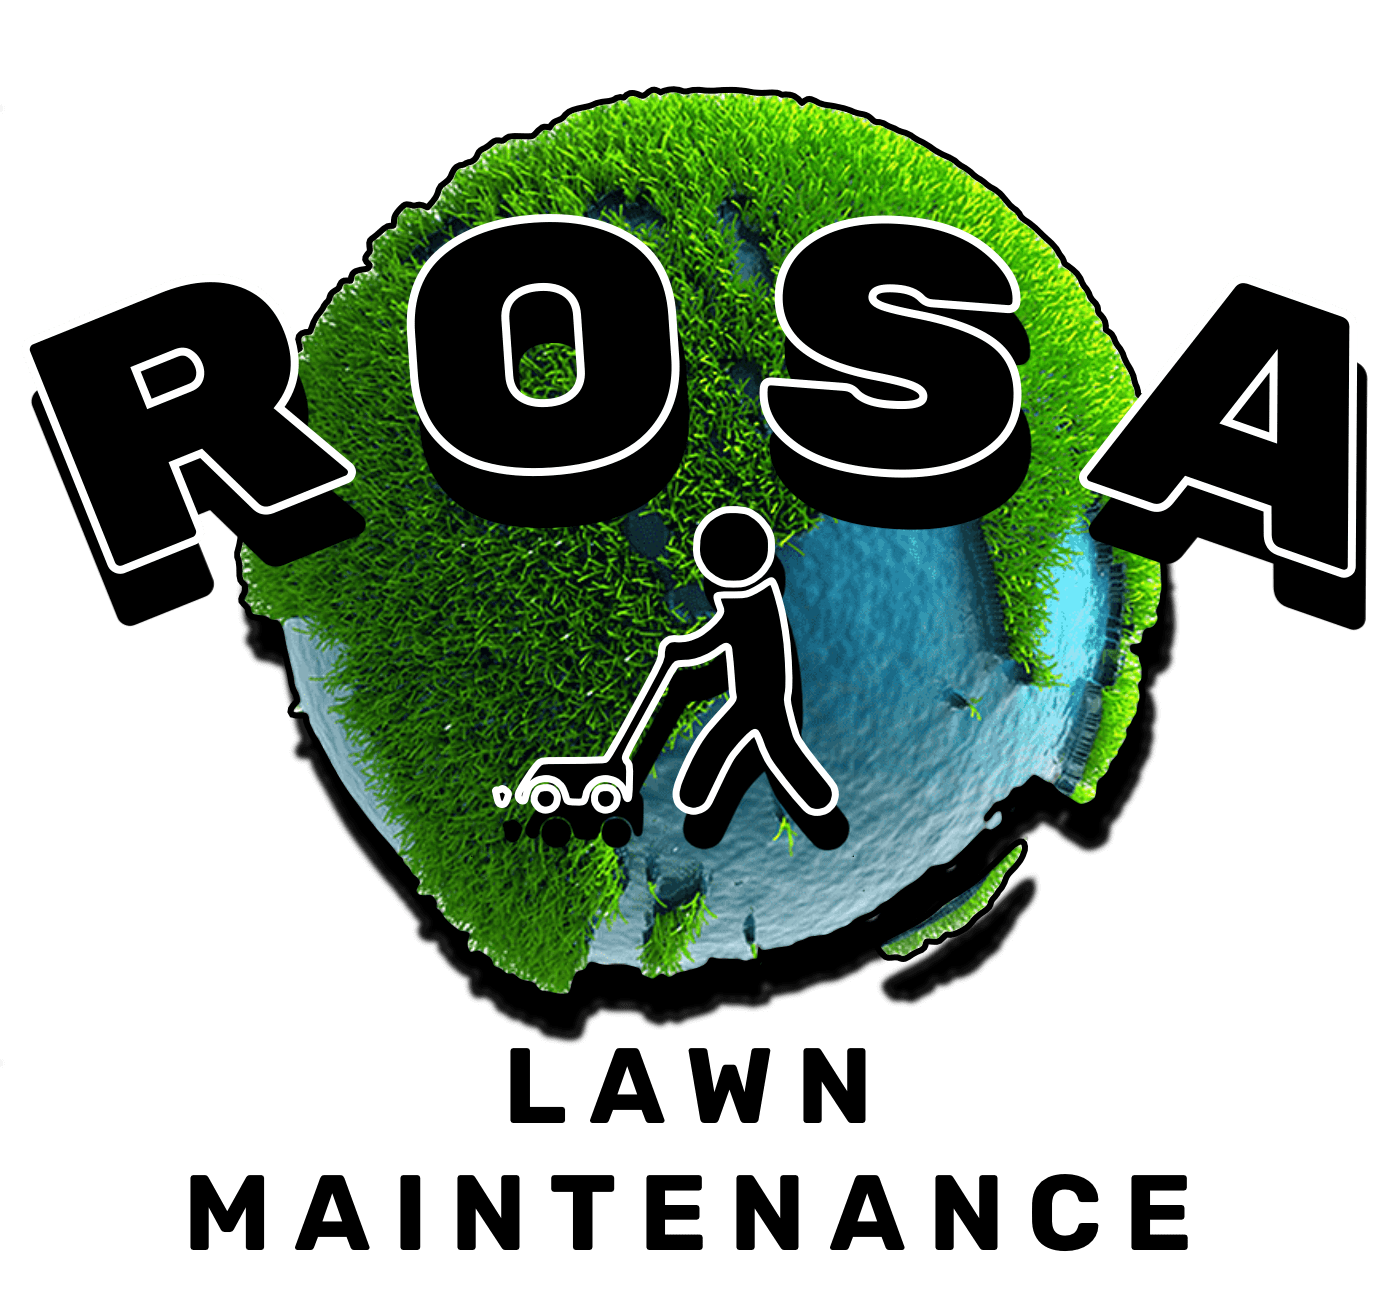 Rosa Lawn Maintenance logo